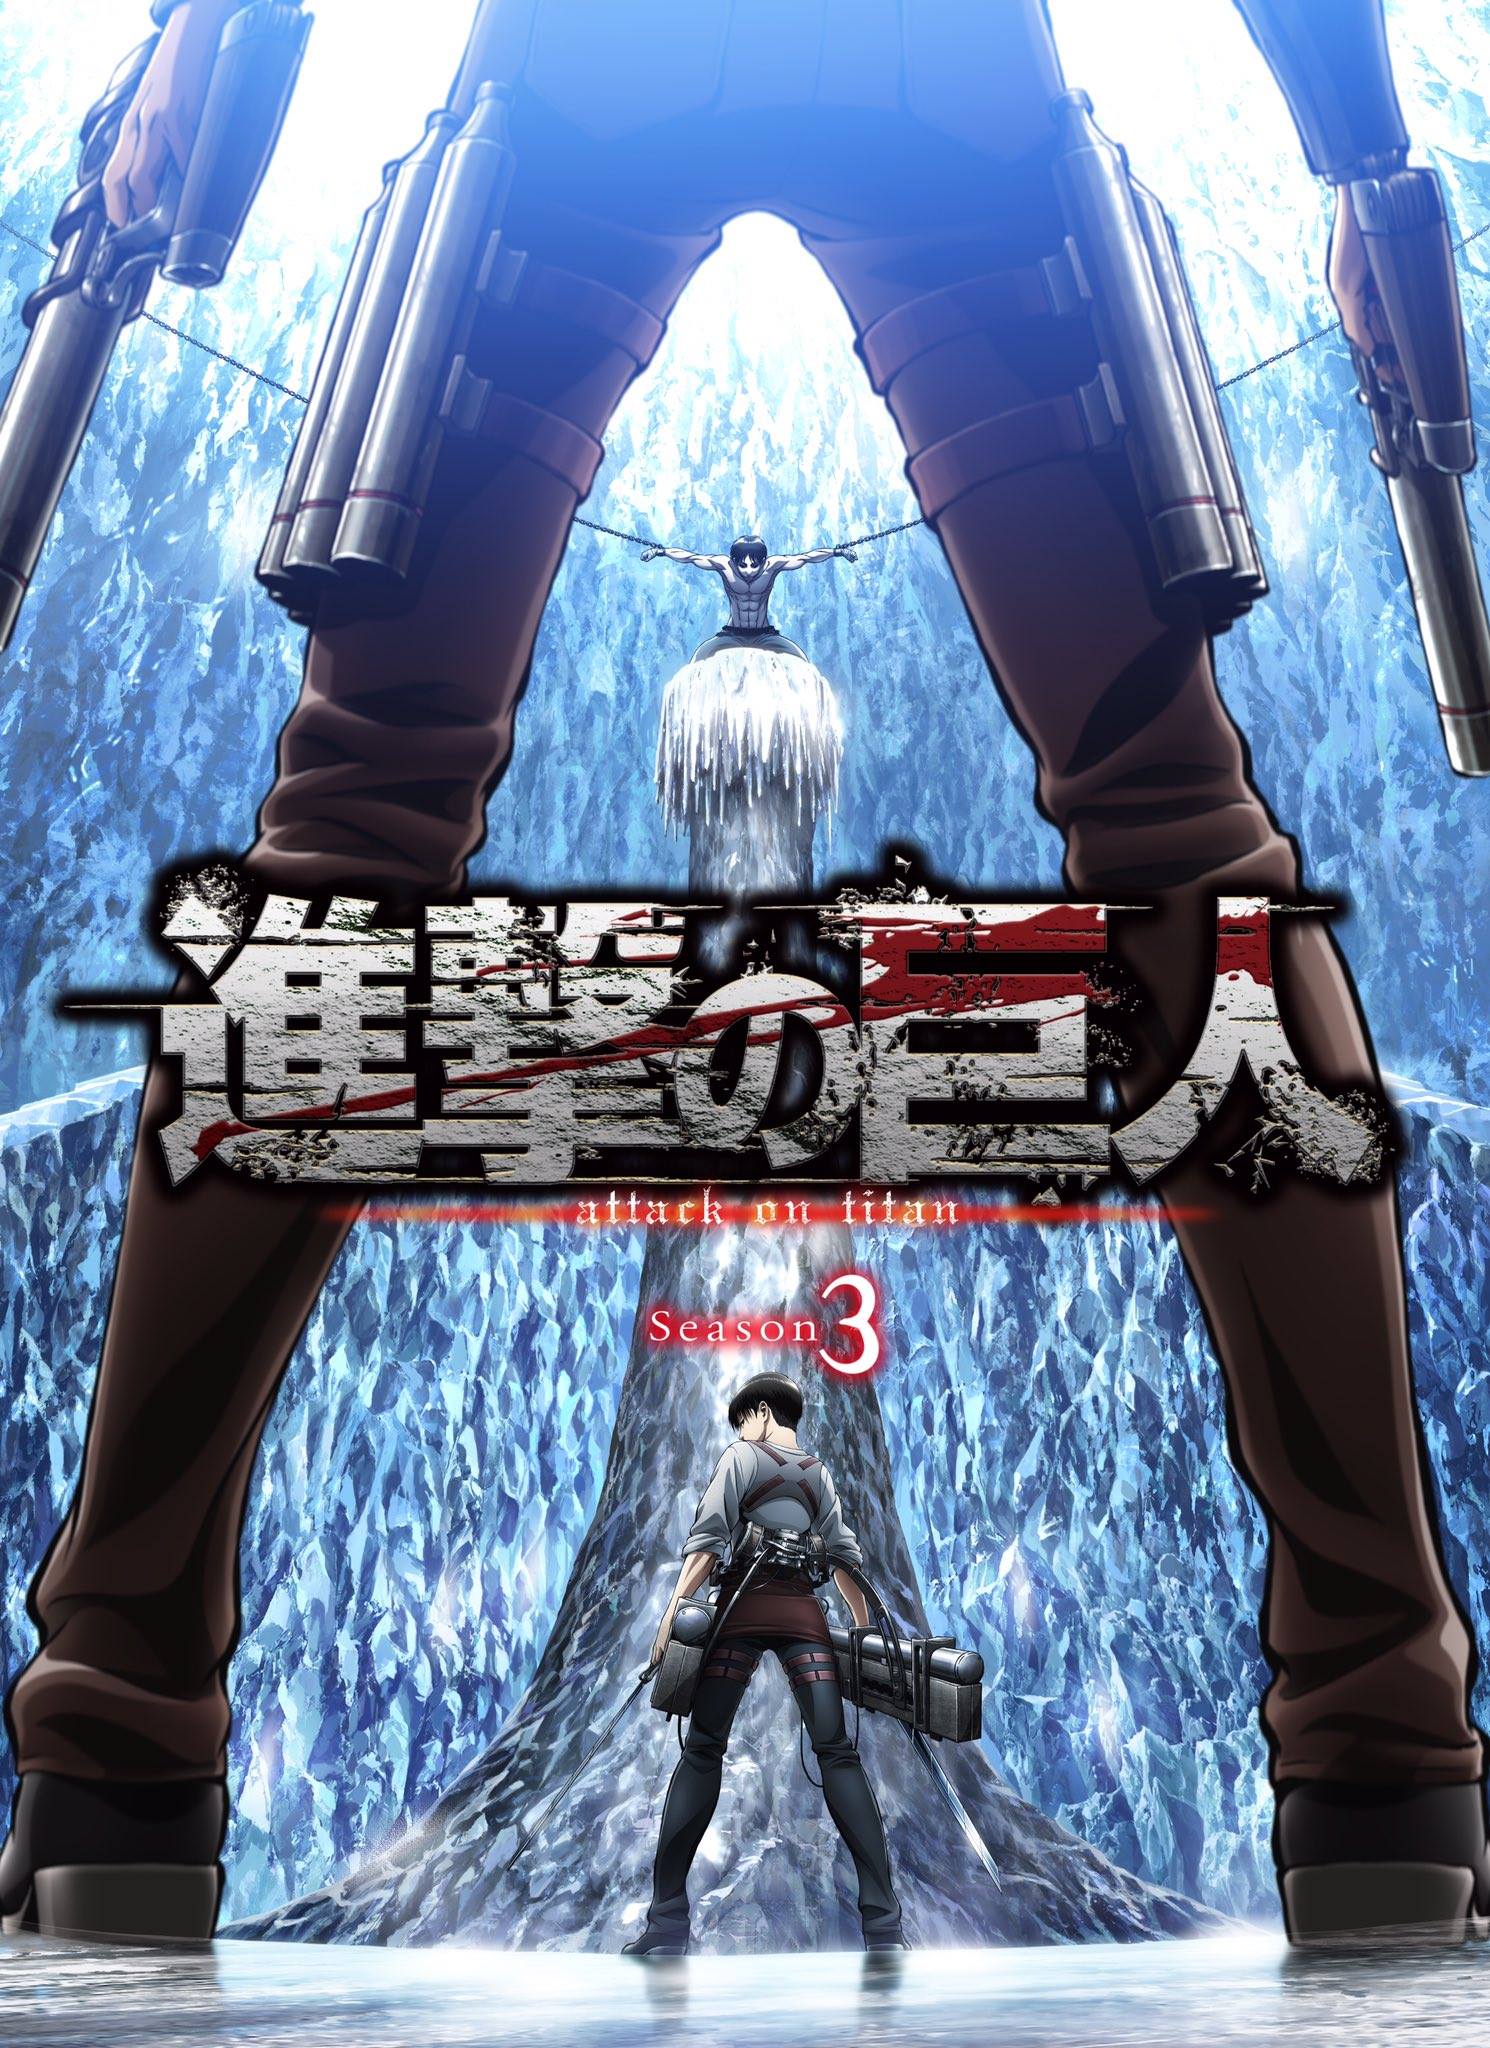 Attack on Titan Final Season Part 3 Reveals New Key Visual - Anime